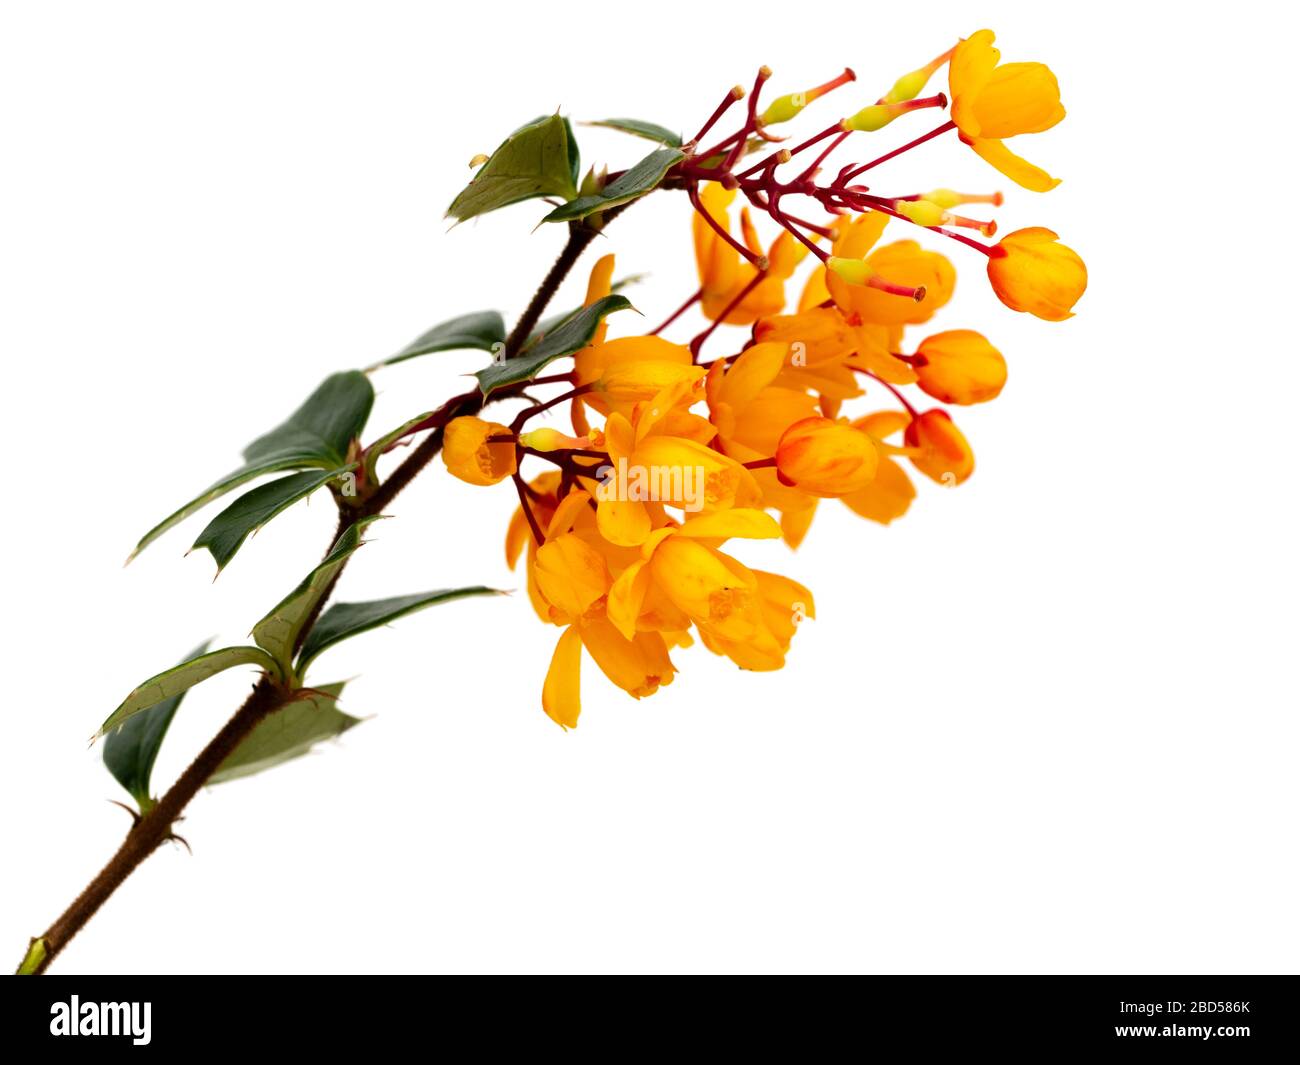 Orange flowers of the spring flowering, spiky leaved evergreen shrub, Berberis darwinii, on a white background Stock Photo